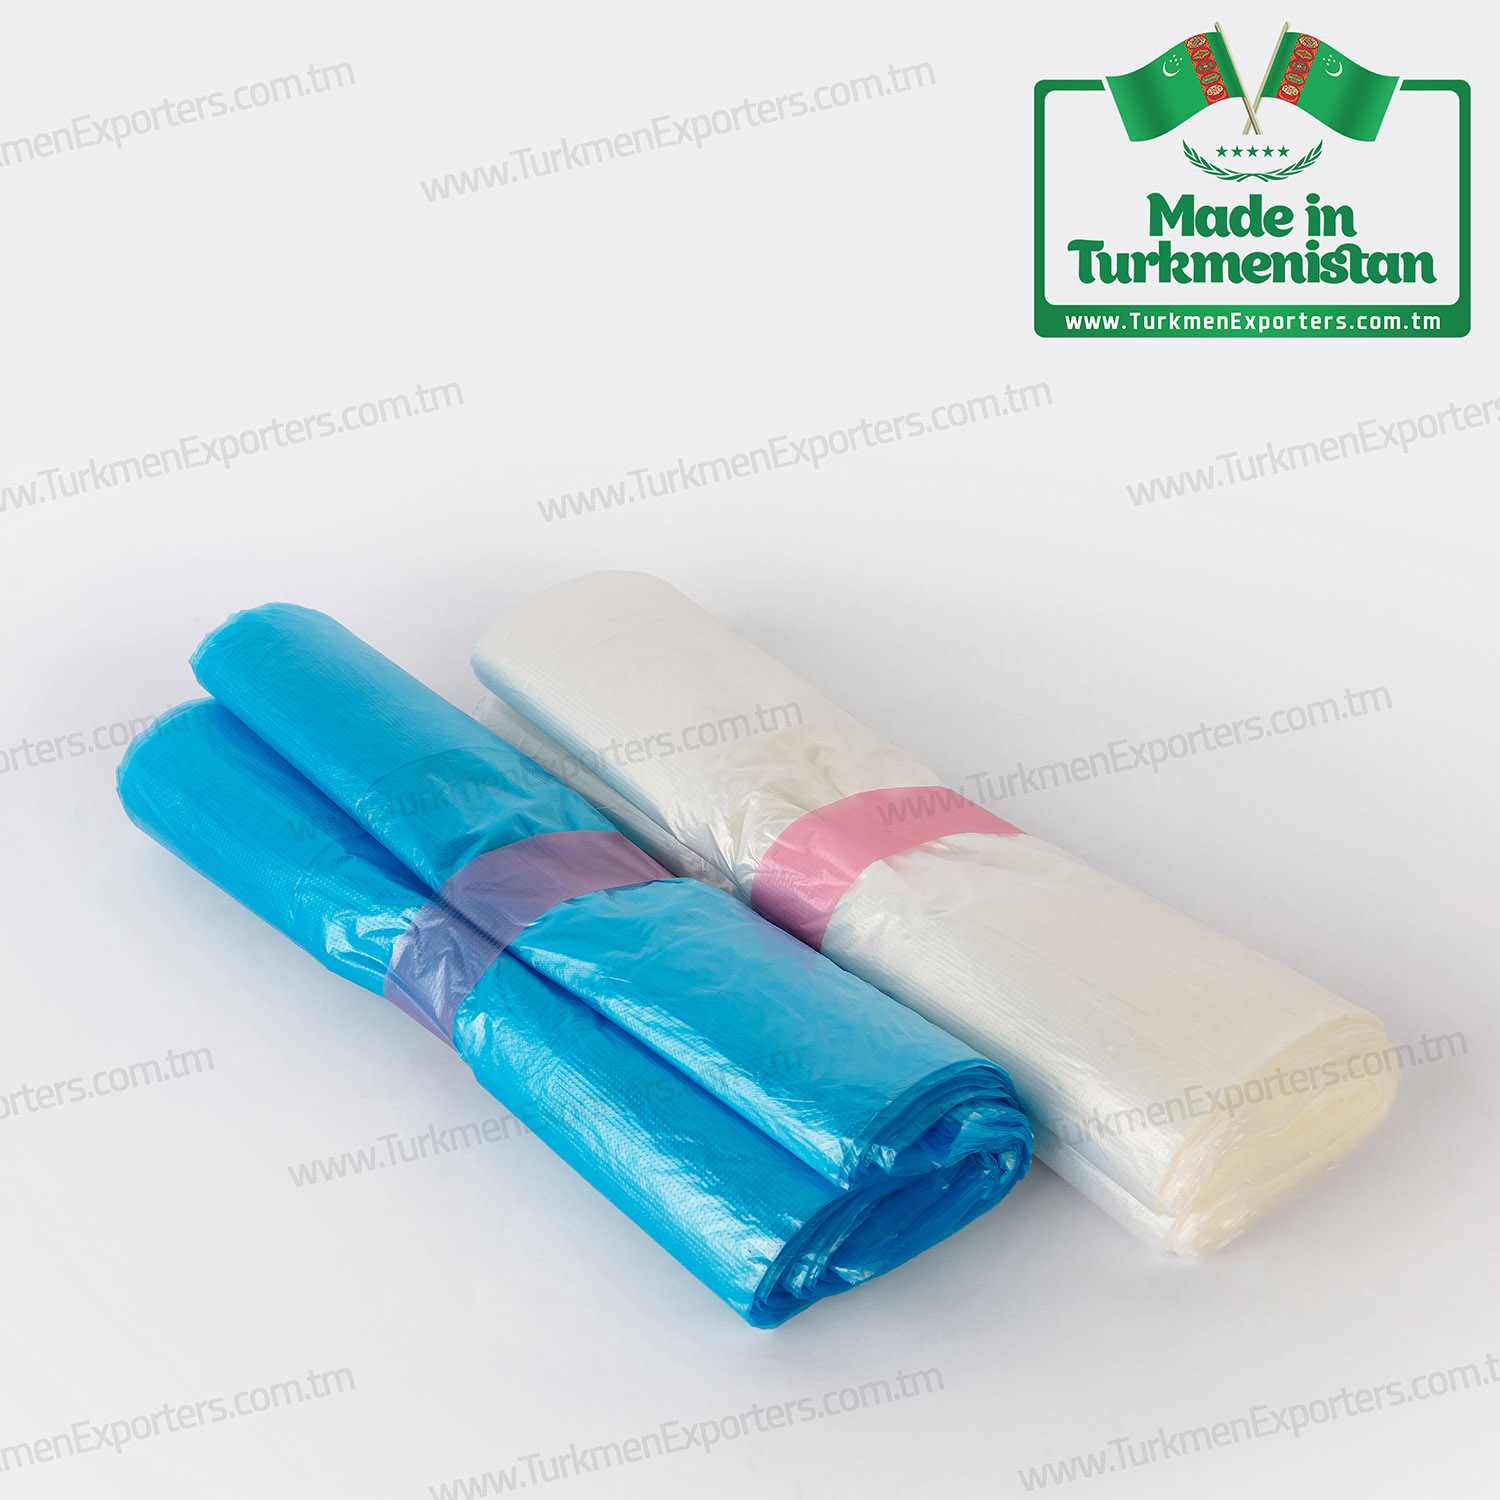 Plastic bag wholesale from Turkmenistan | Yuwash Umman economic society